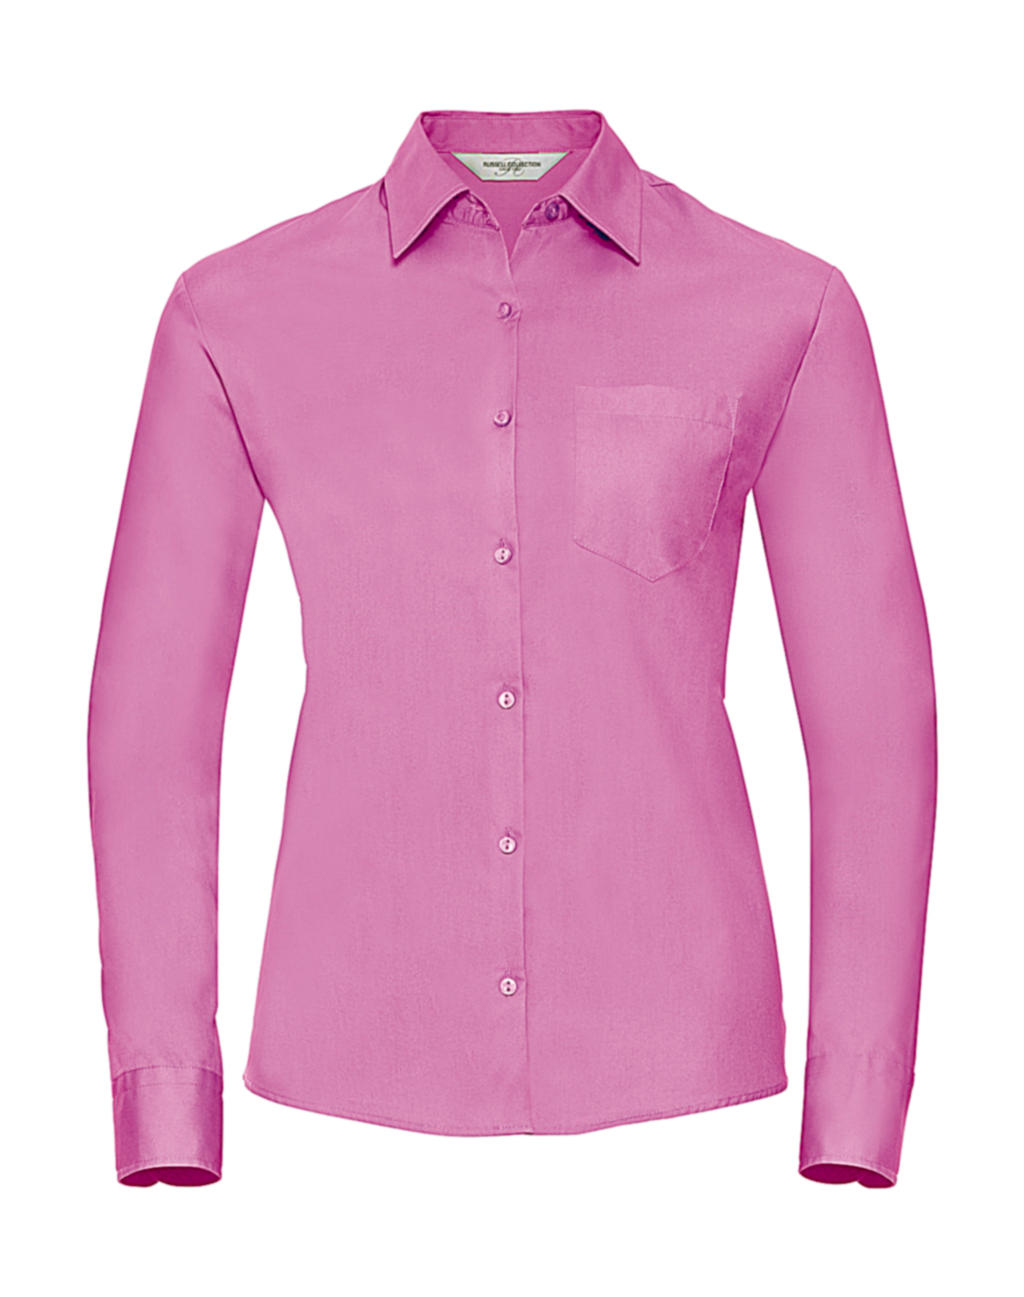  Ladies Cotton Poplin Shirt LS in Farbe Bright Pink